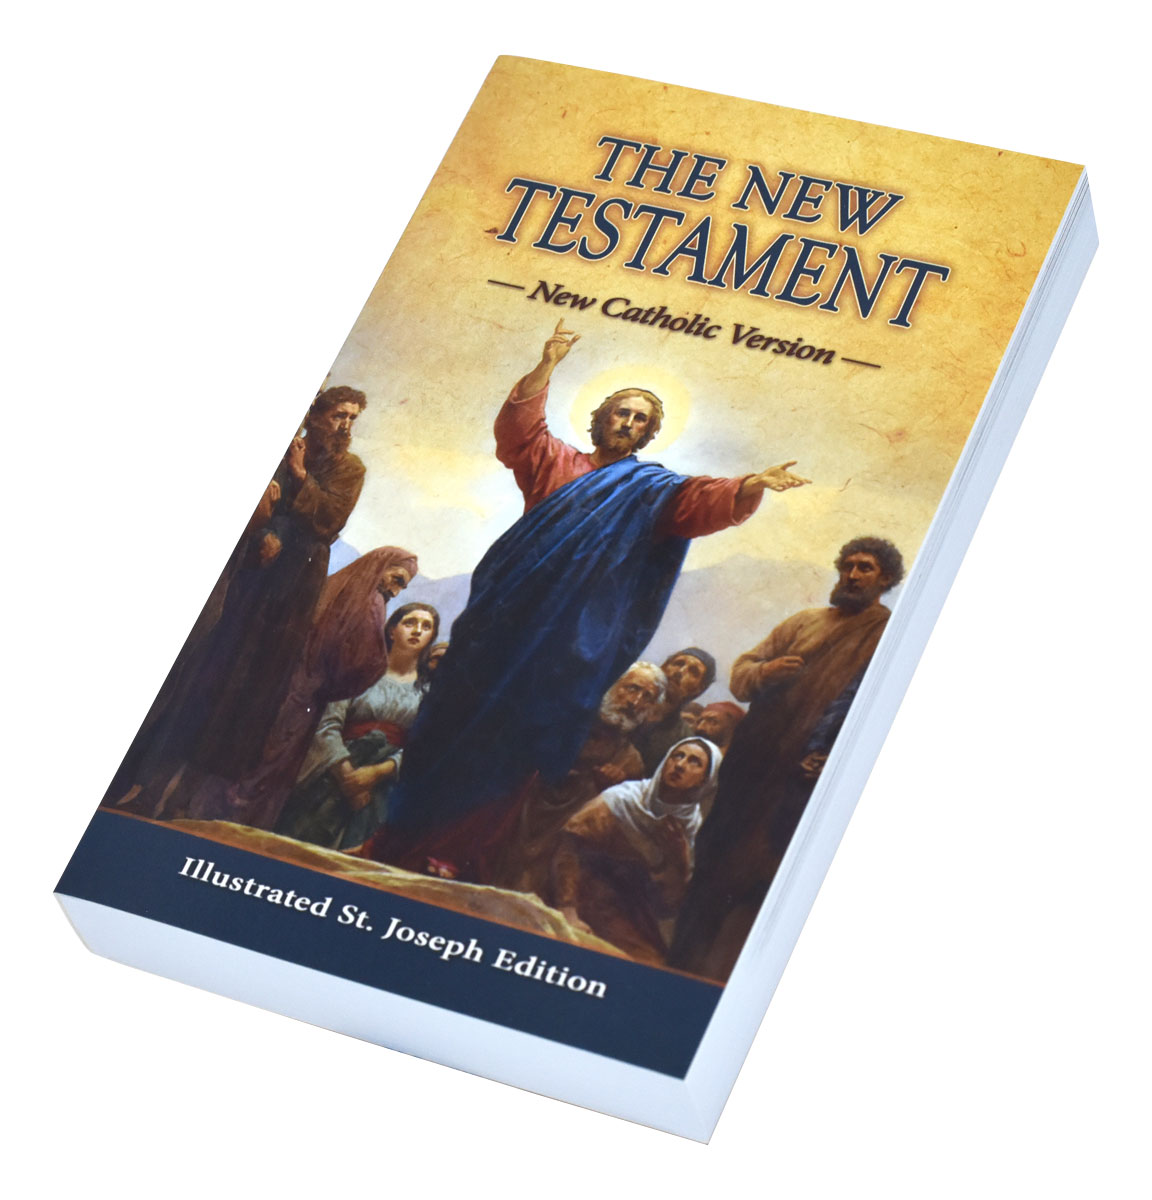 St. Joseph New Catholic Version New Testament Pocket Edition Paperback 630/04